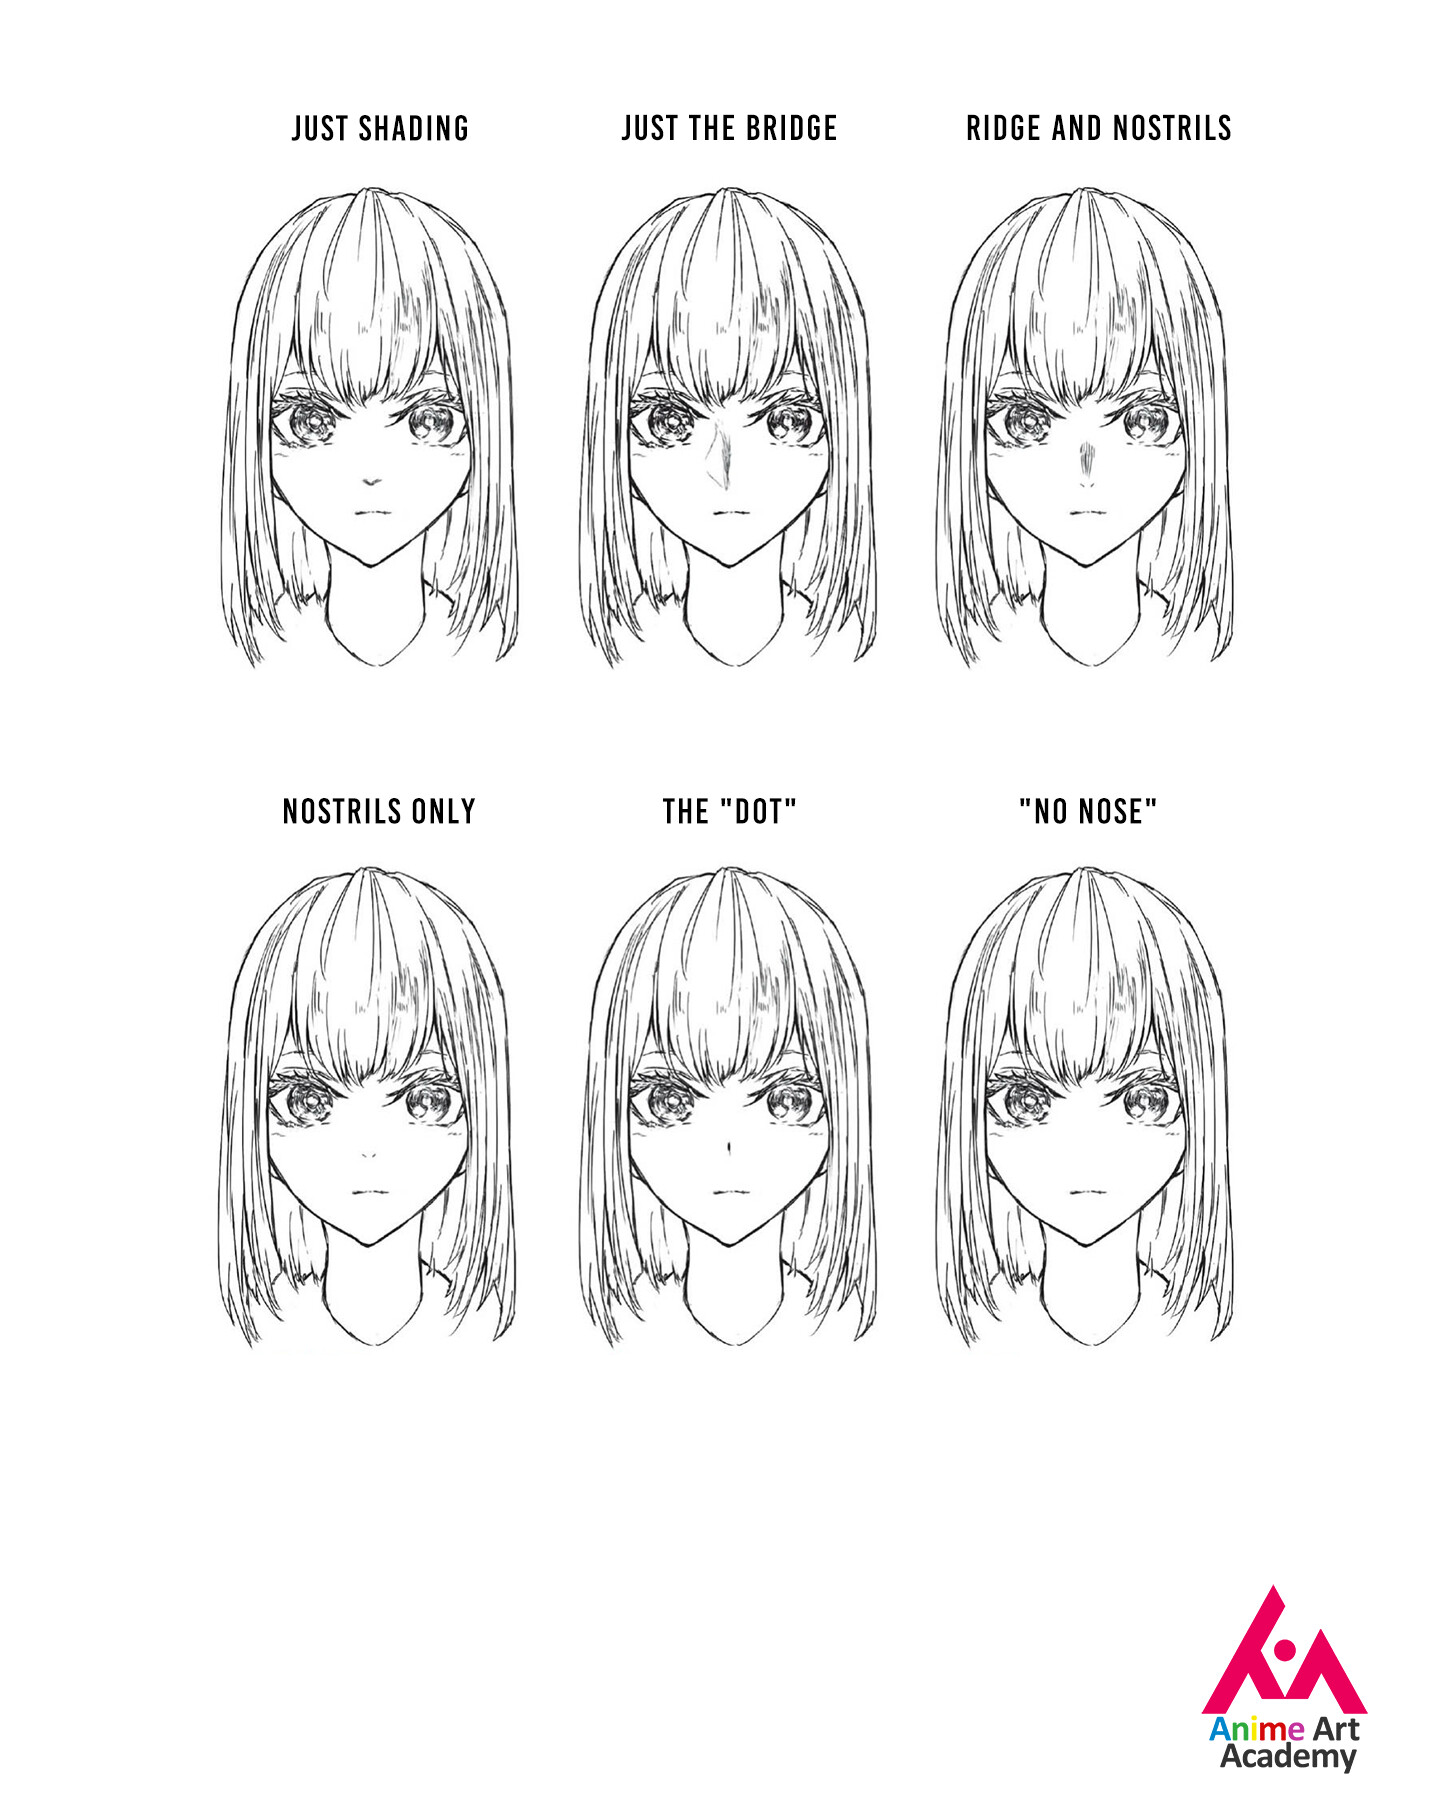 How to Draw Anime Boys